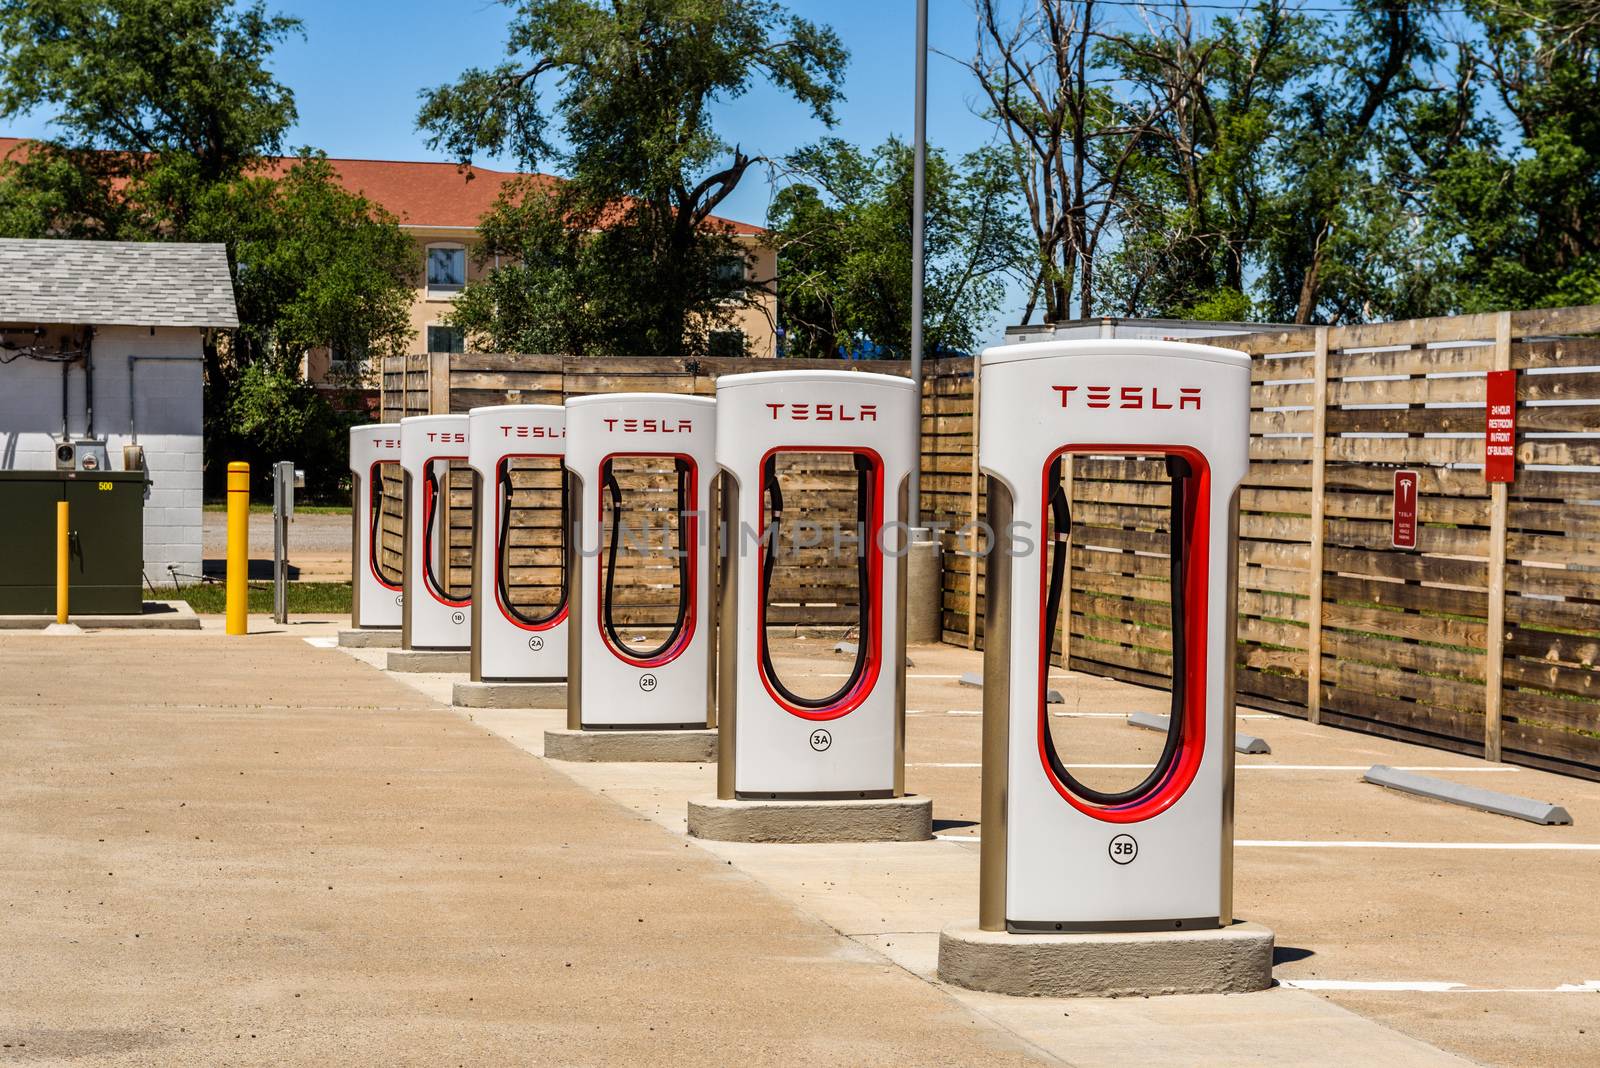 Multiple Tesla chargers in Arizona by nickfox